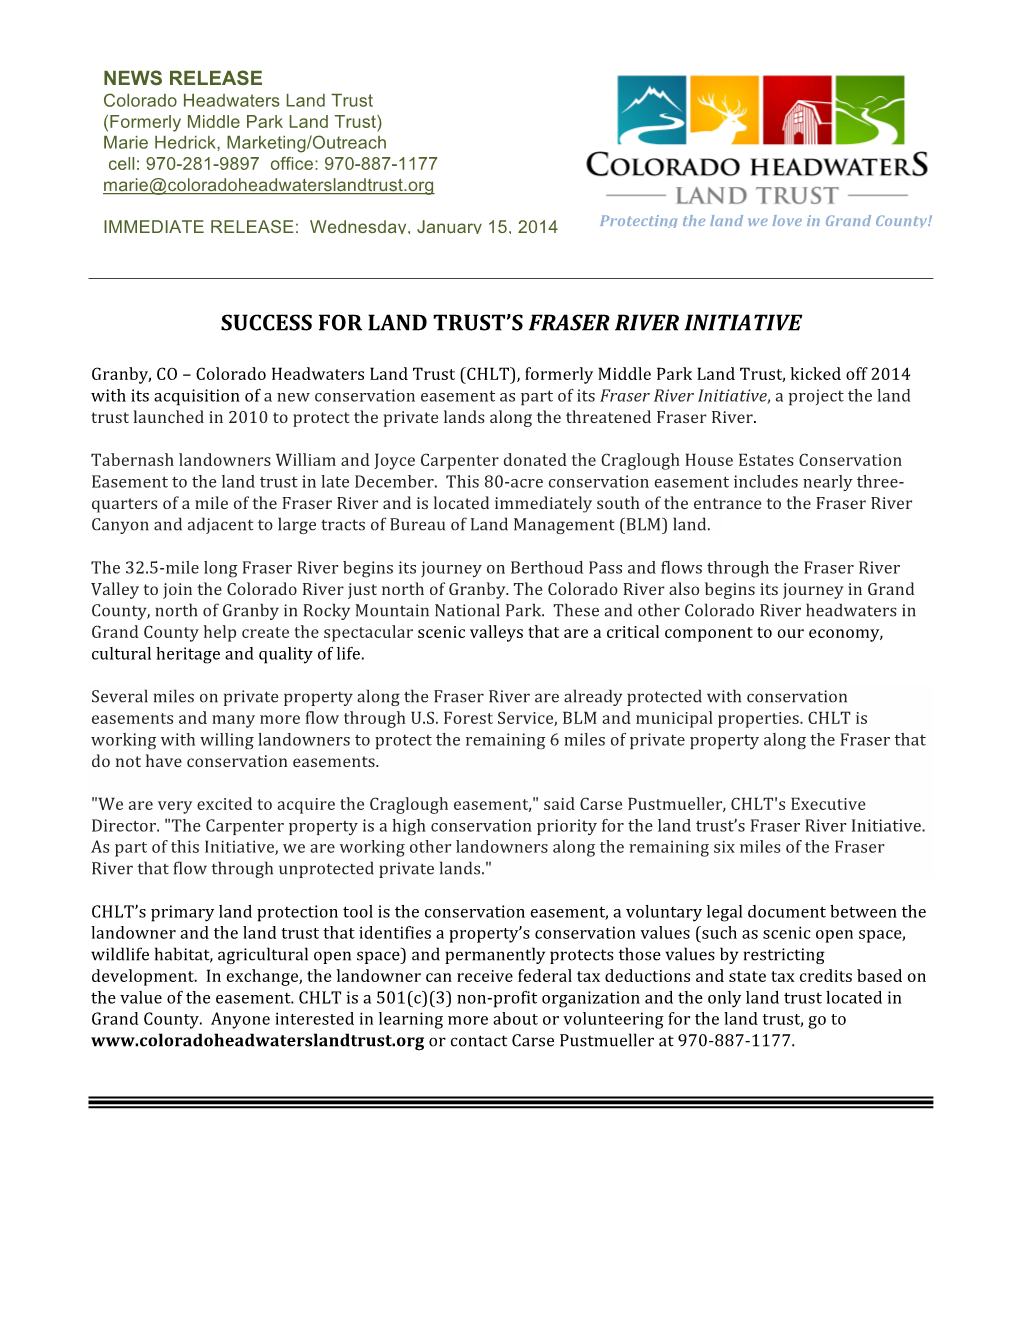 Success for Land Trust's Fraser River Initiative